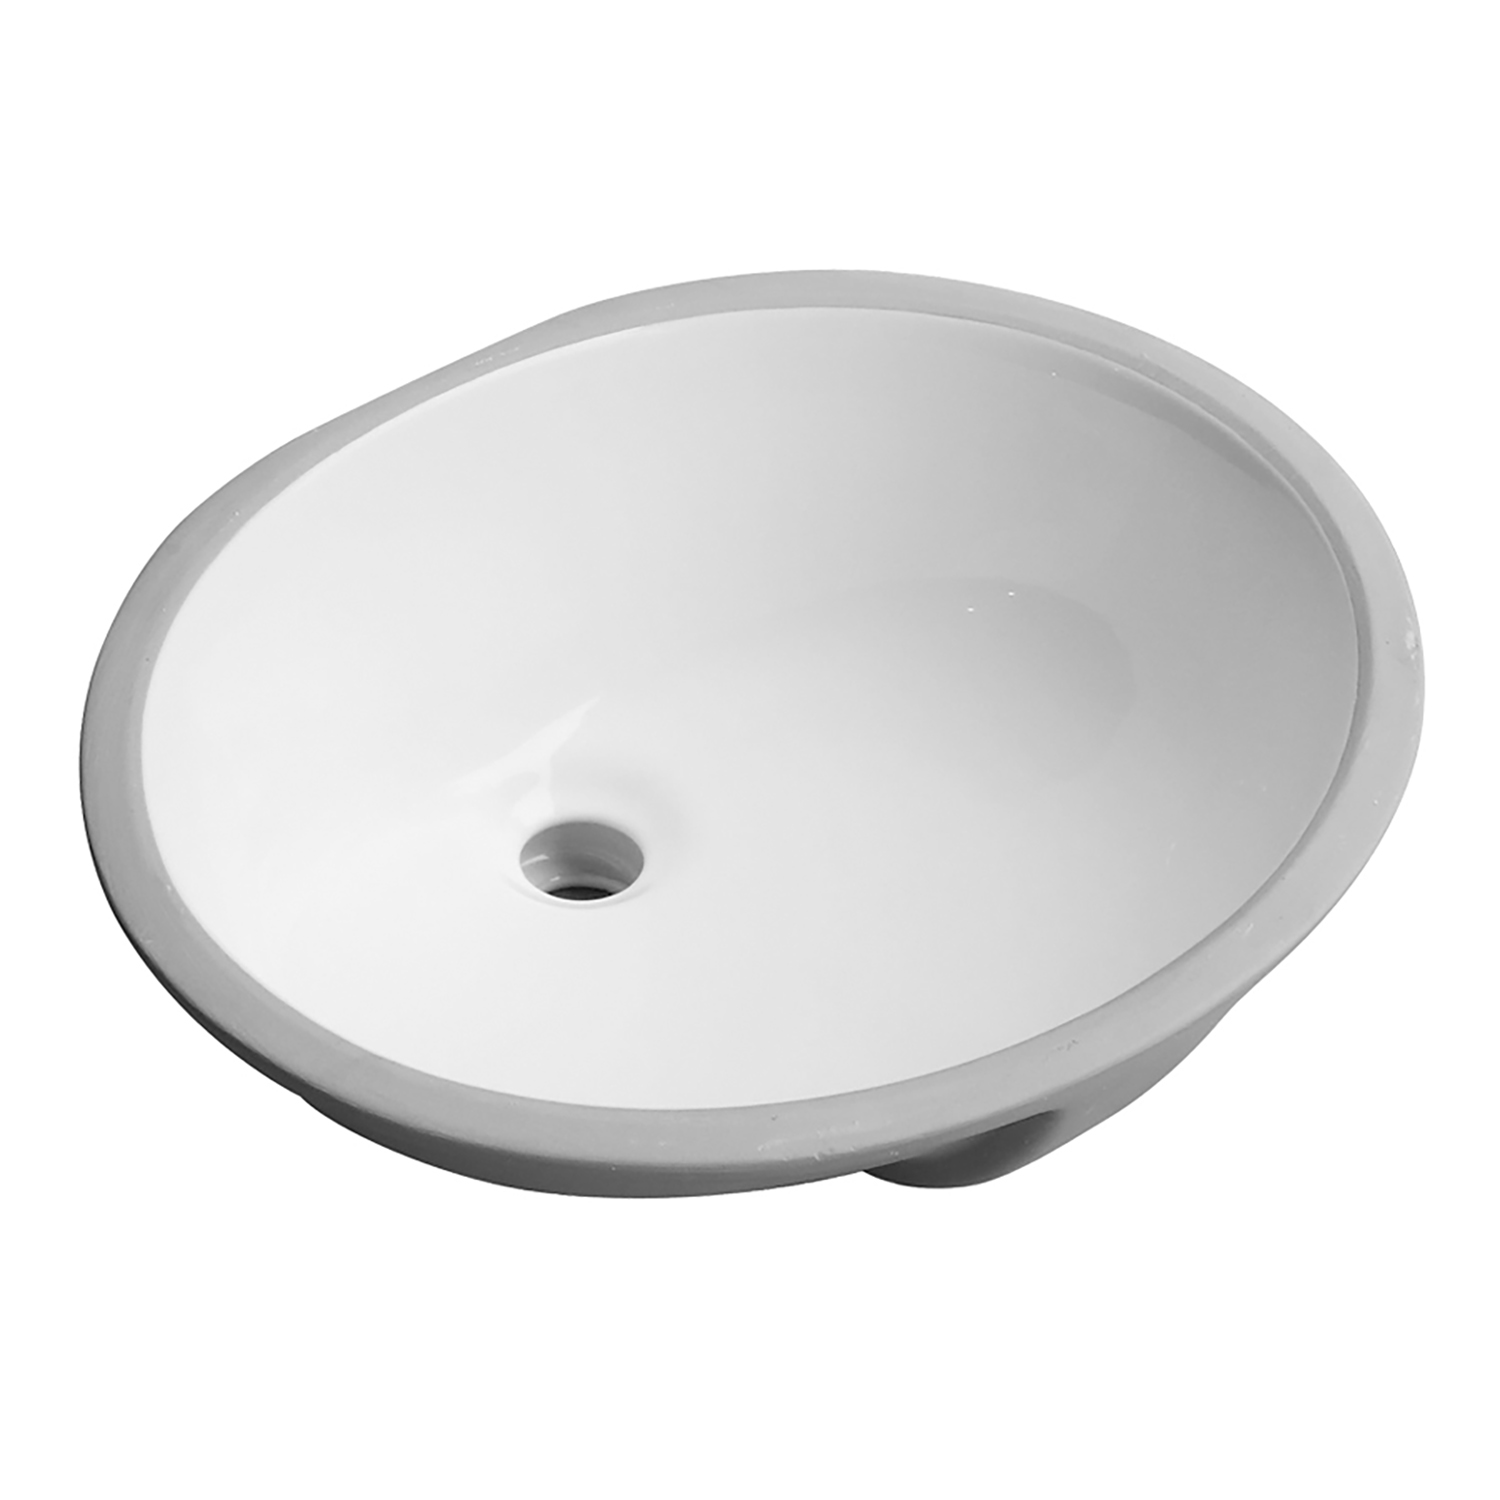 Duko C4020 19" x 16" White Oval Ceramic Bathroom Vanity Undermount Sink